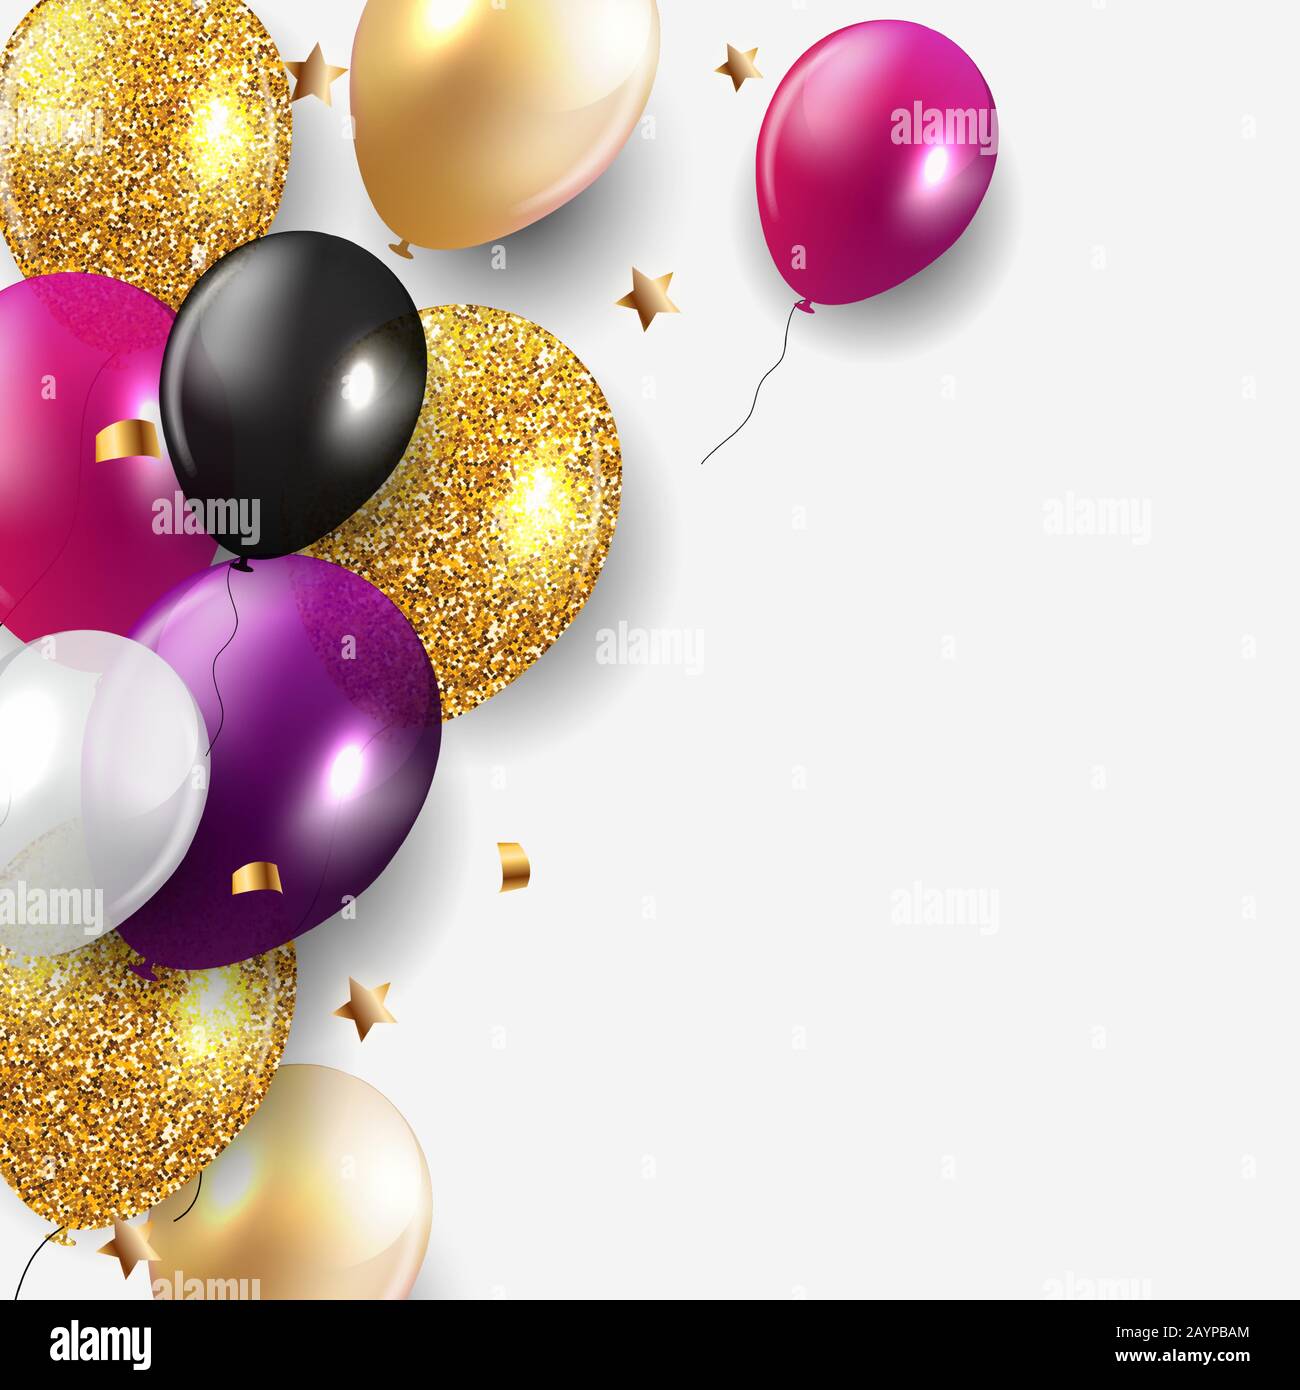 happy birthday balloons wallpaper